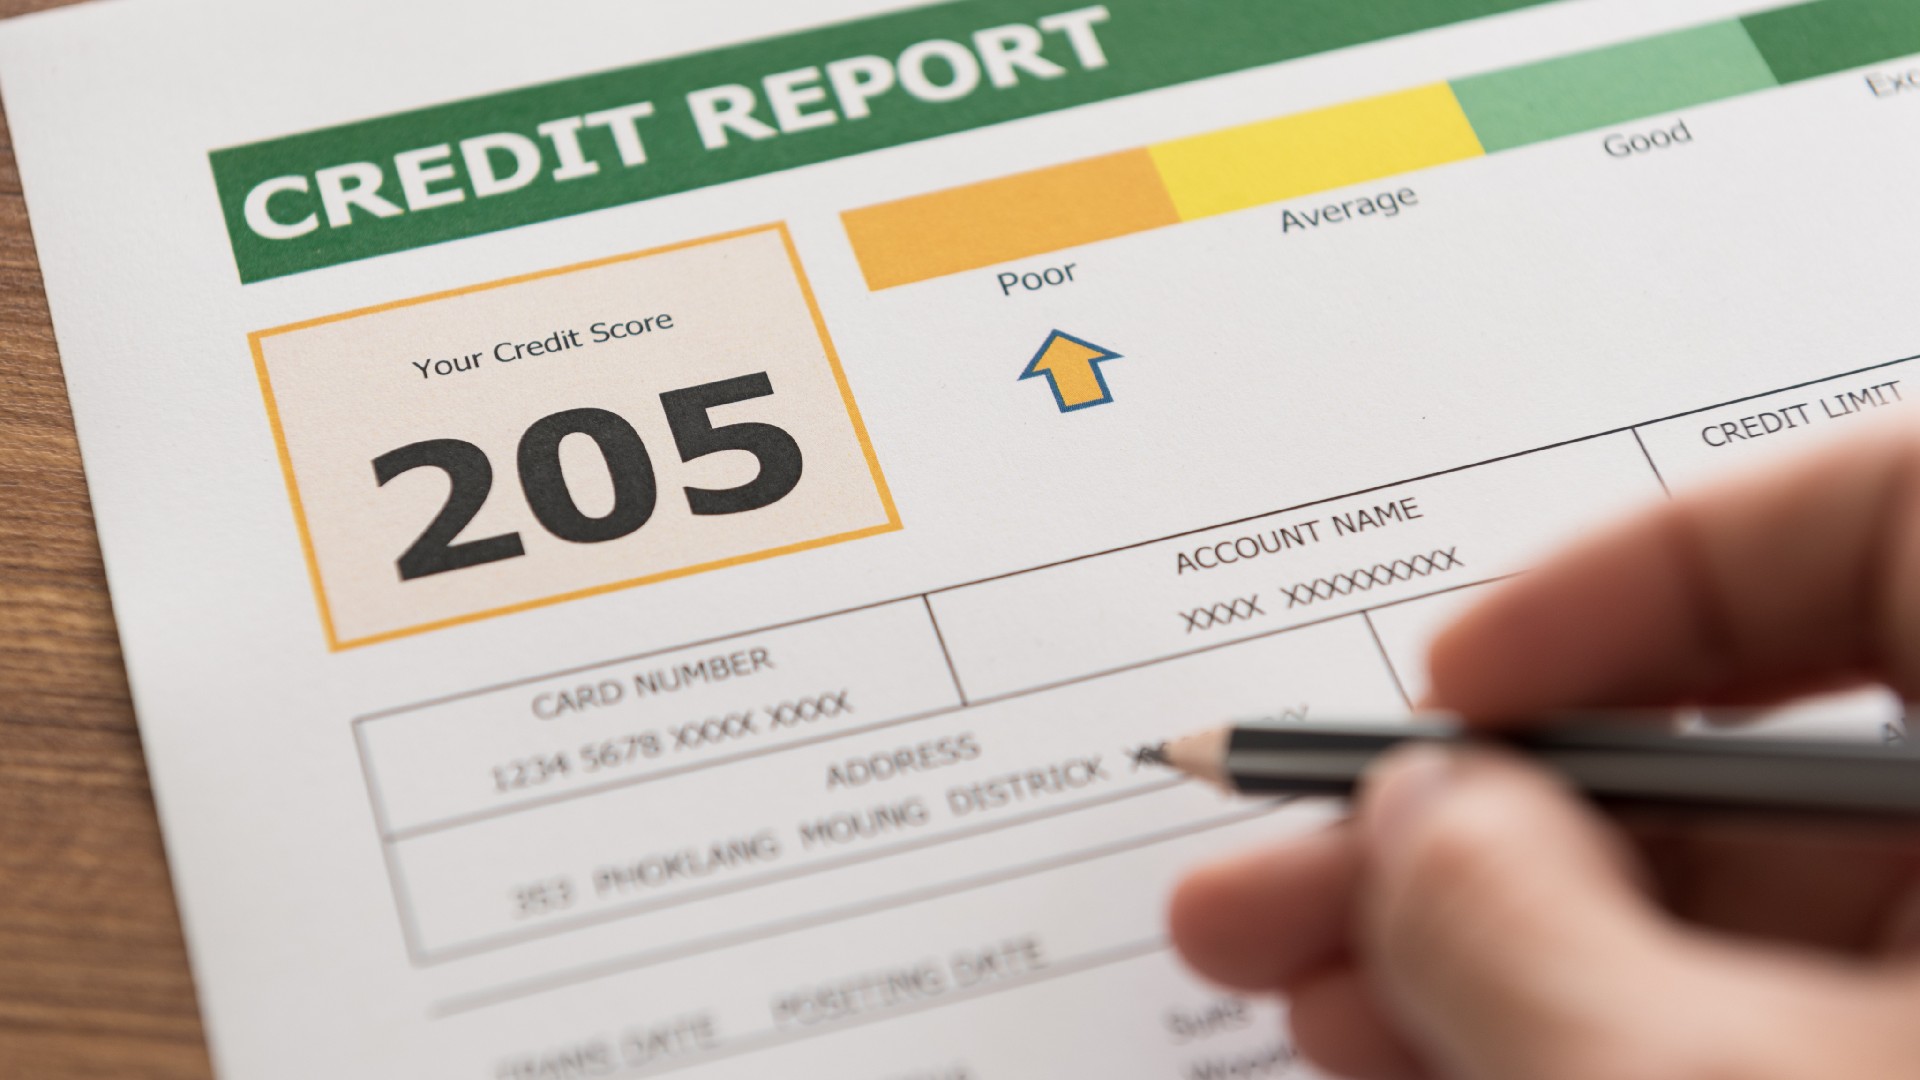 A poor credit score report